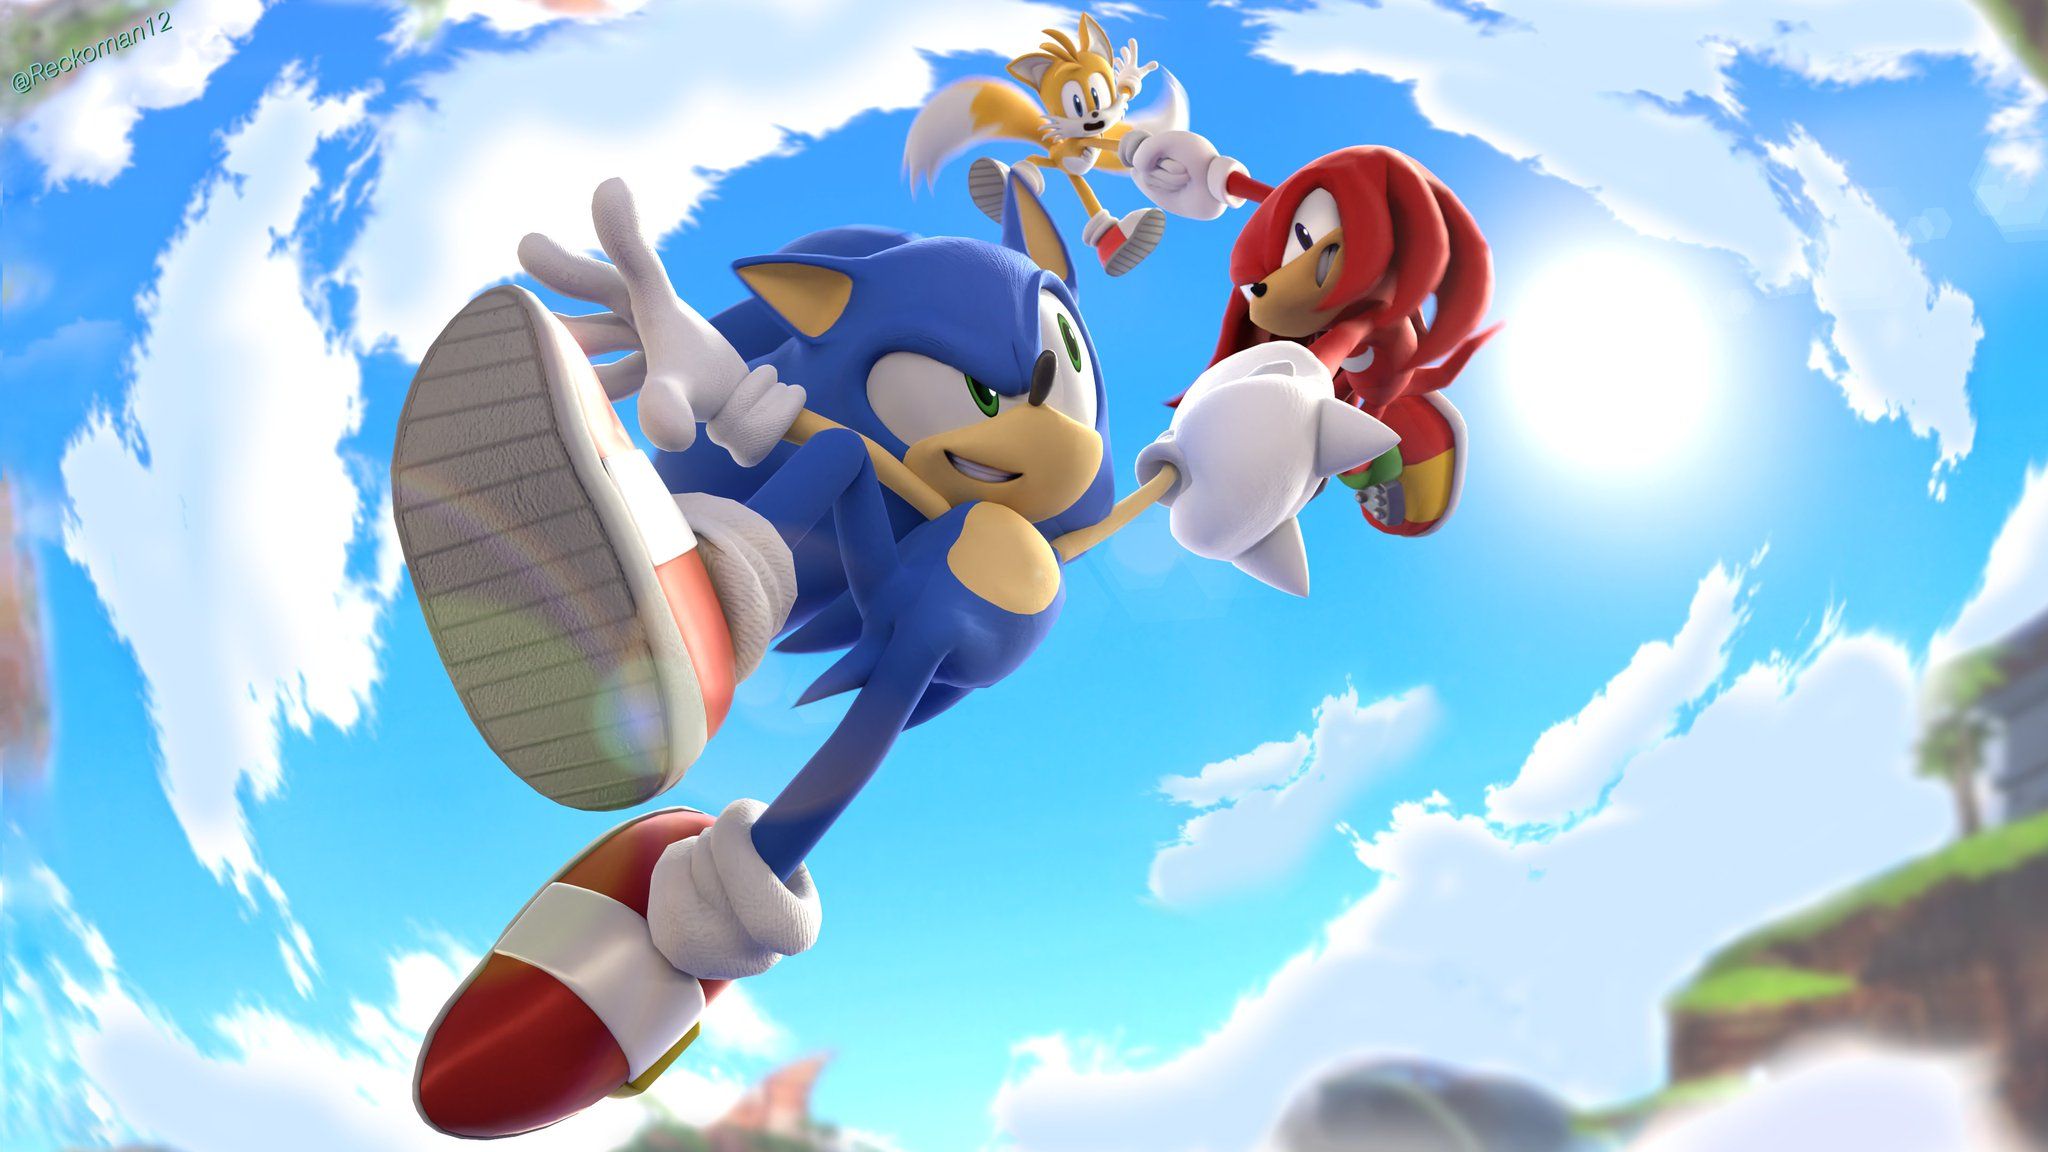 Sonic the Hedgehog Sonic Heroes art created Nice work!